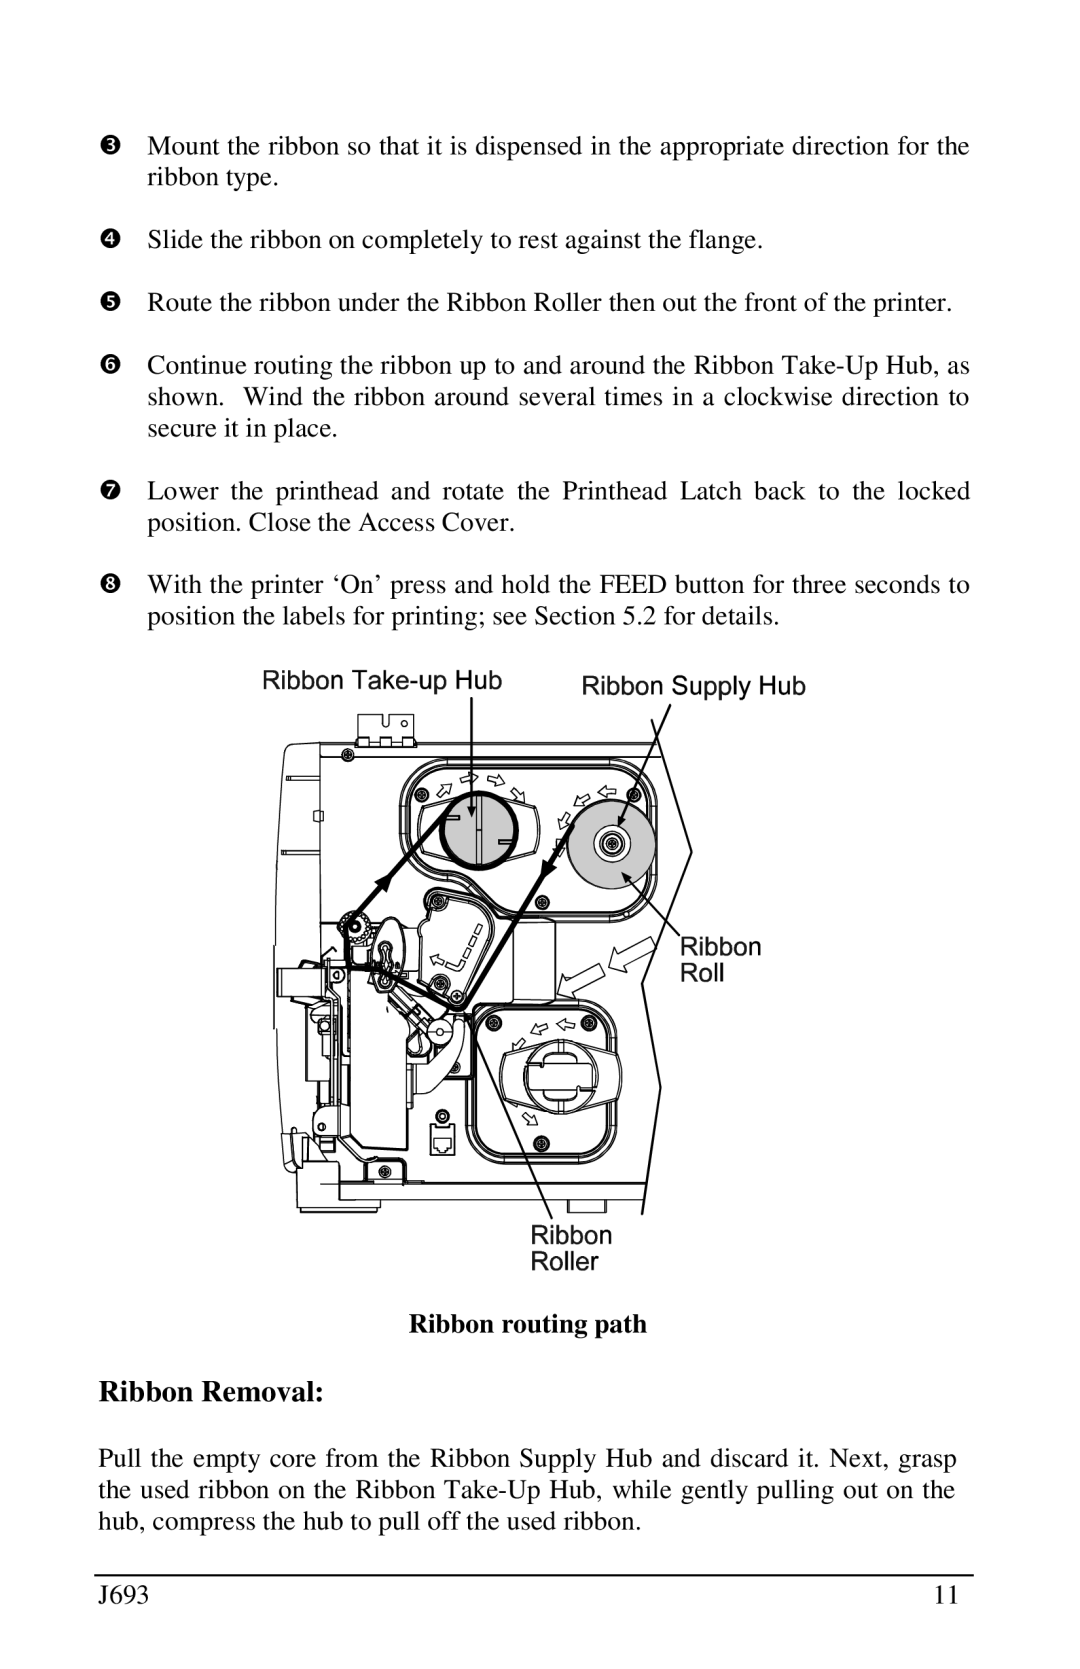 Pitney Bowes J693 manual Ribbon Removal, Ribbon routing path 